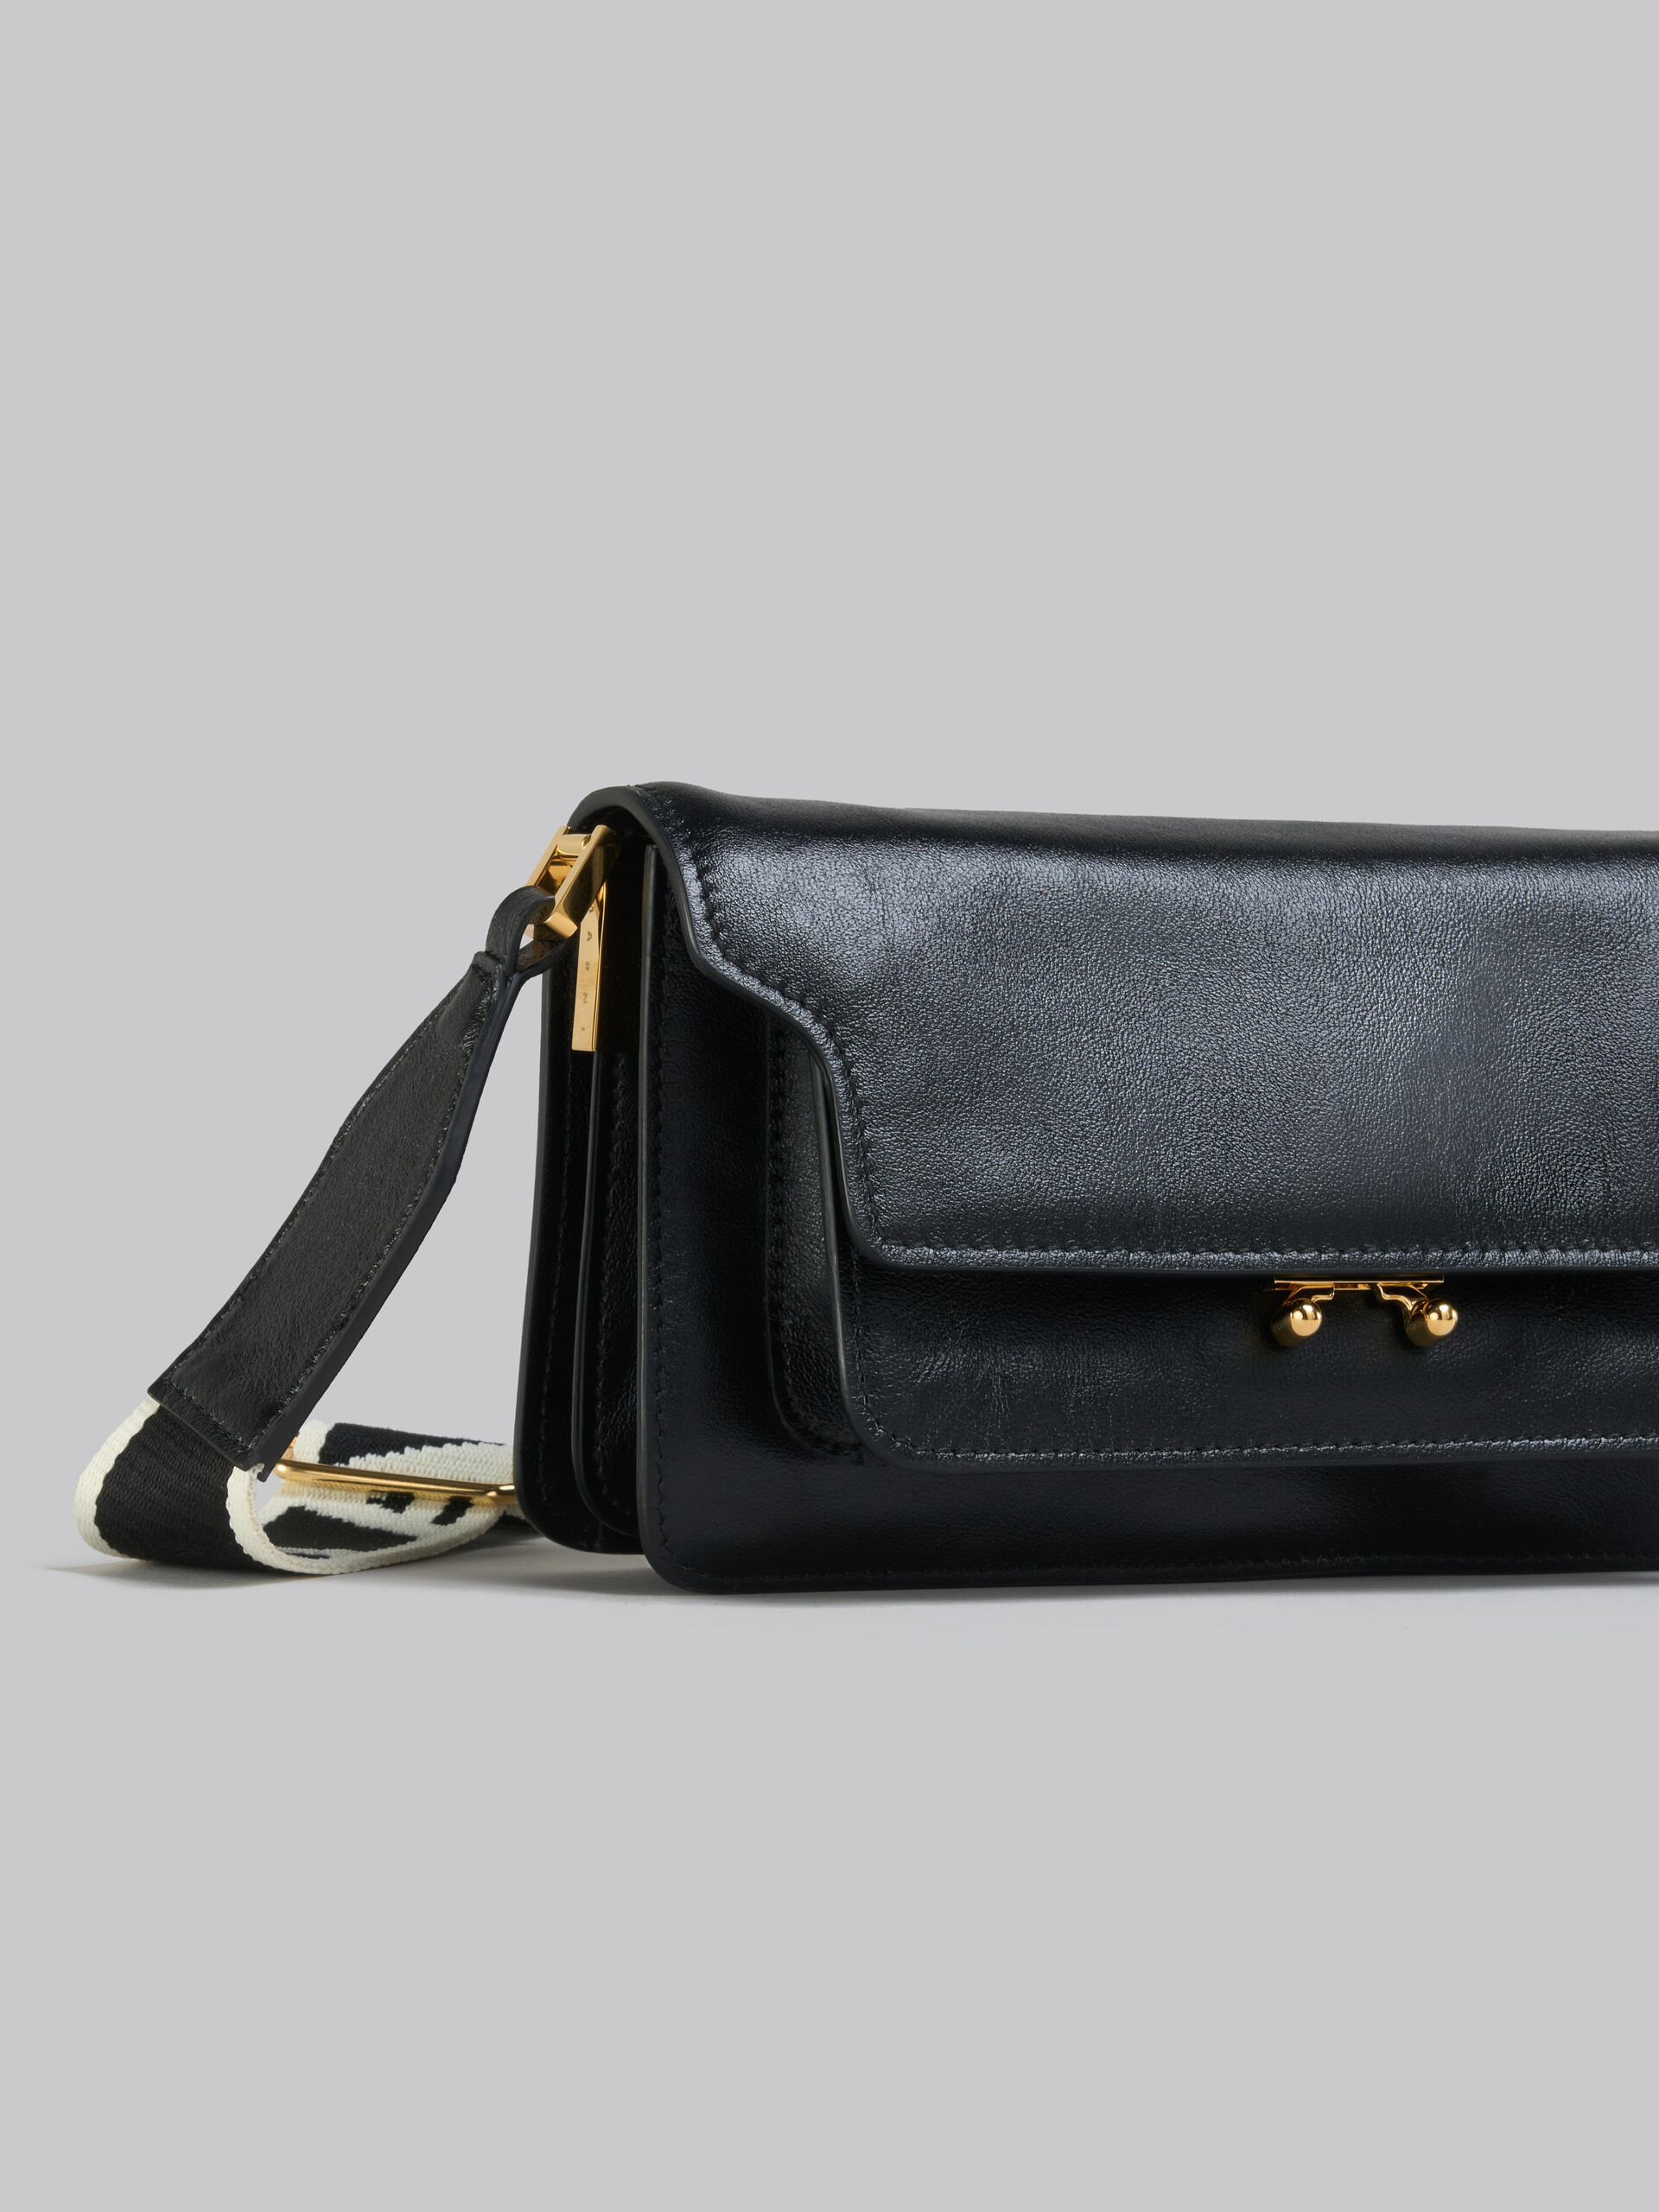 Brown leather E/W Soft Trunk Bag with logo strap - Shoulder Bag - Image 5